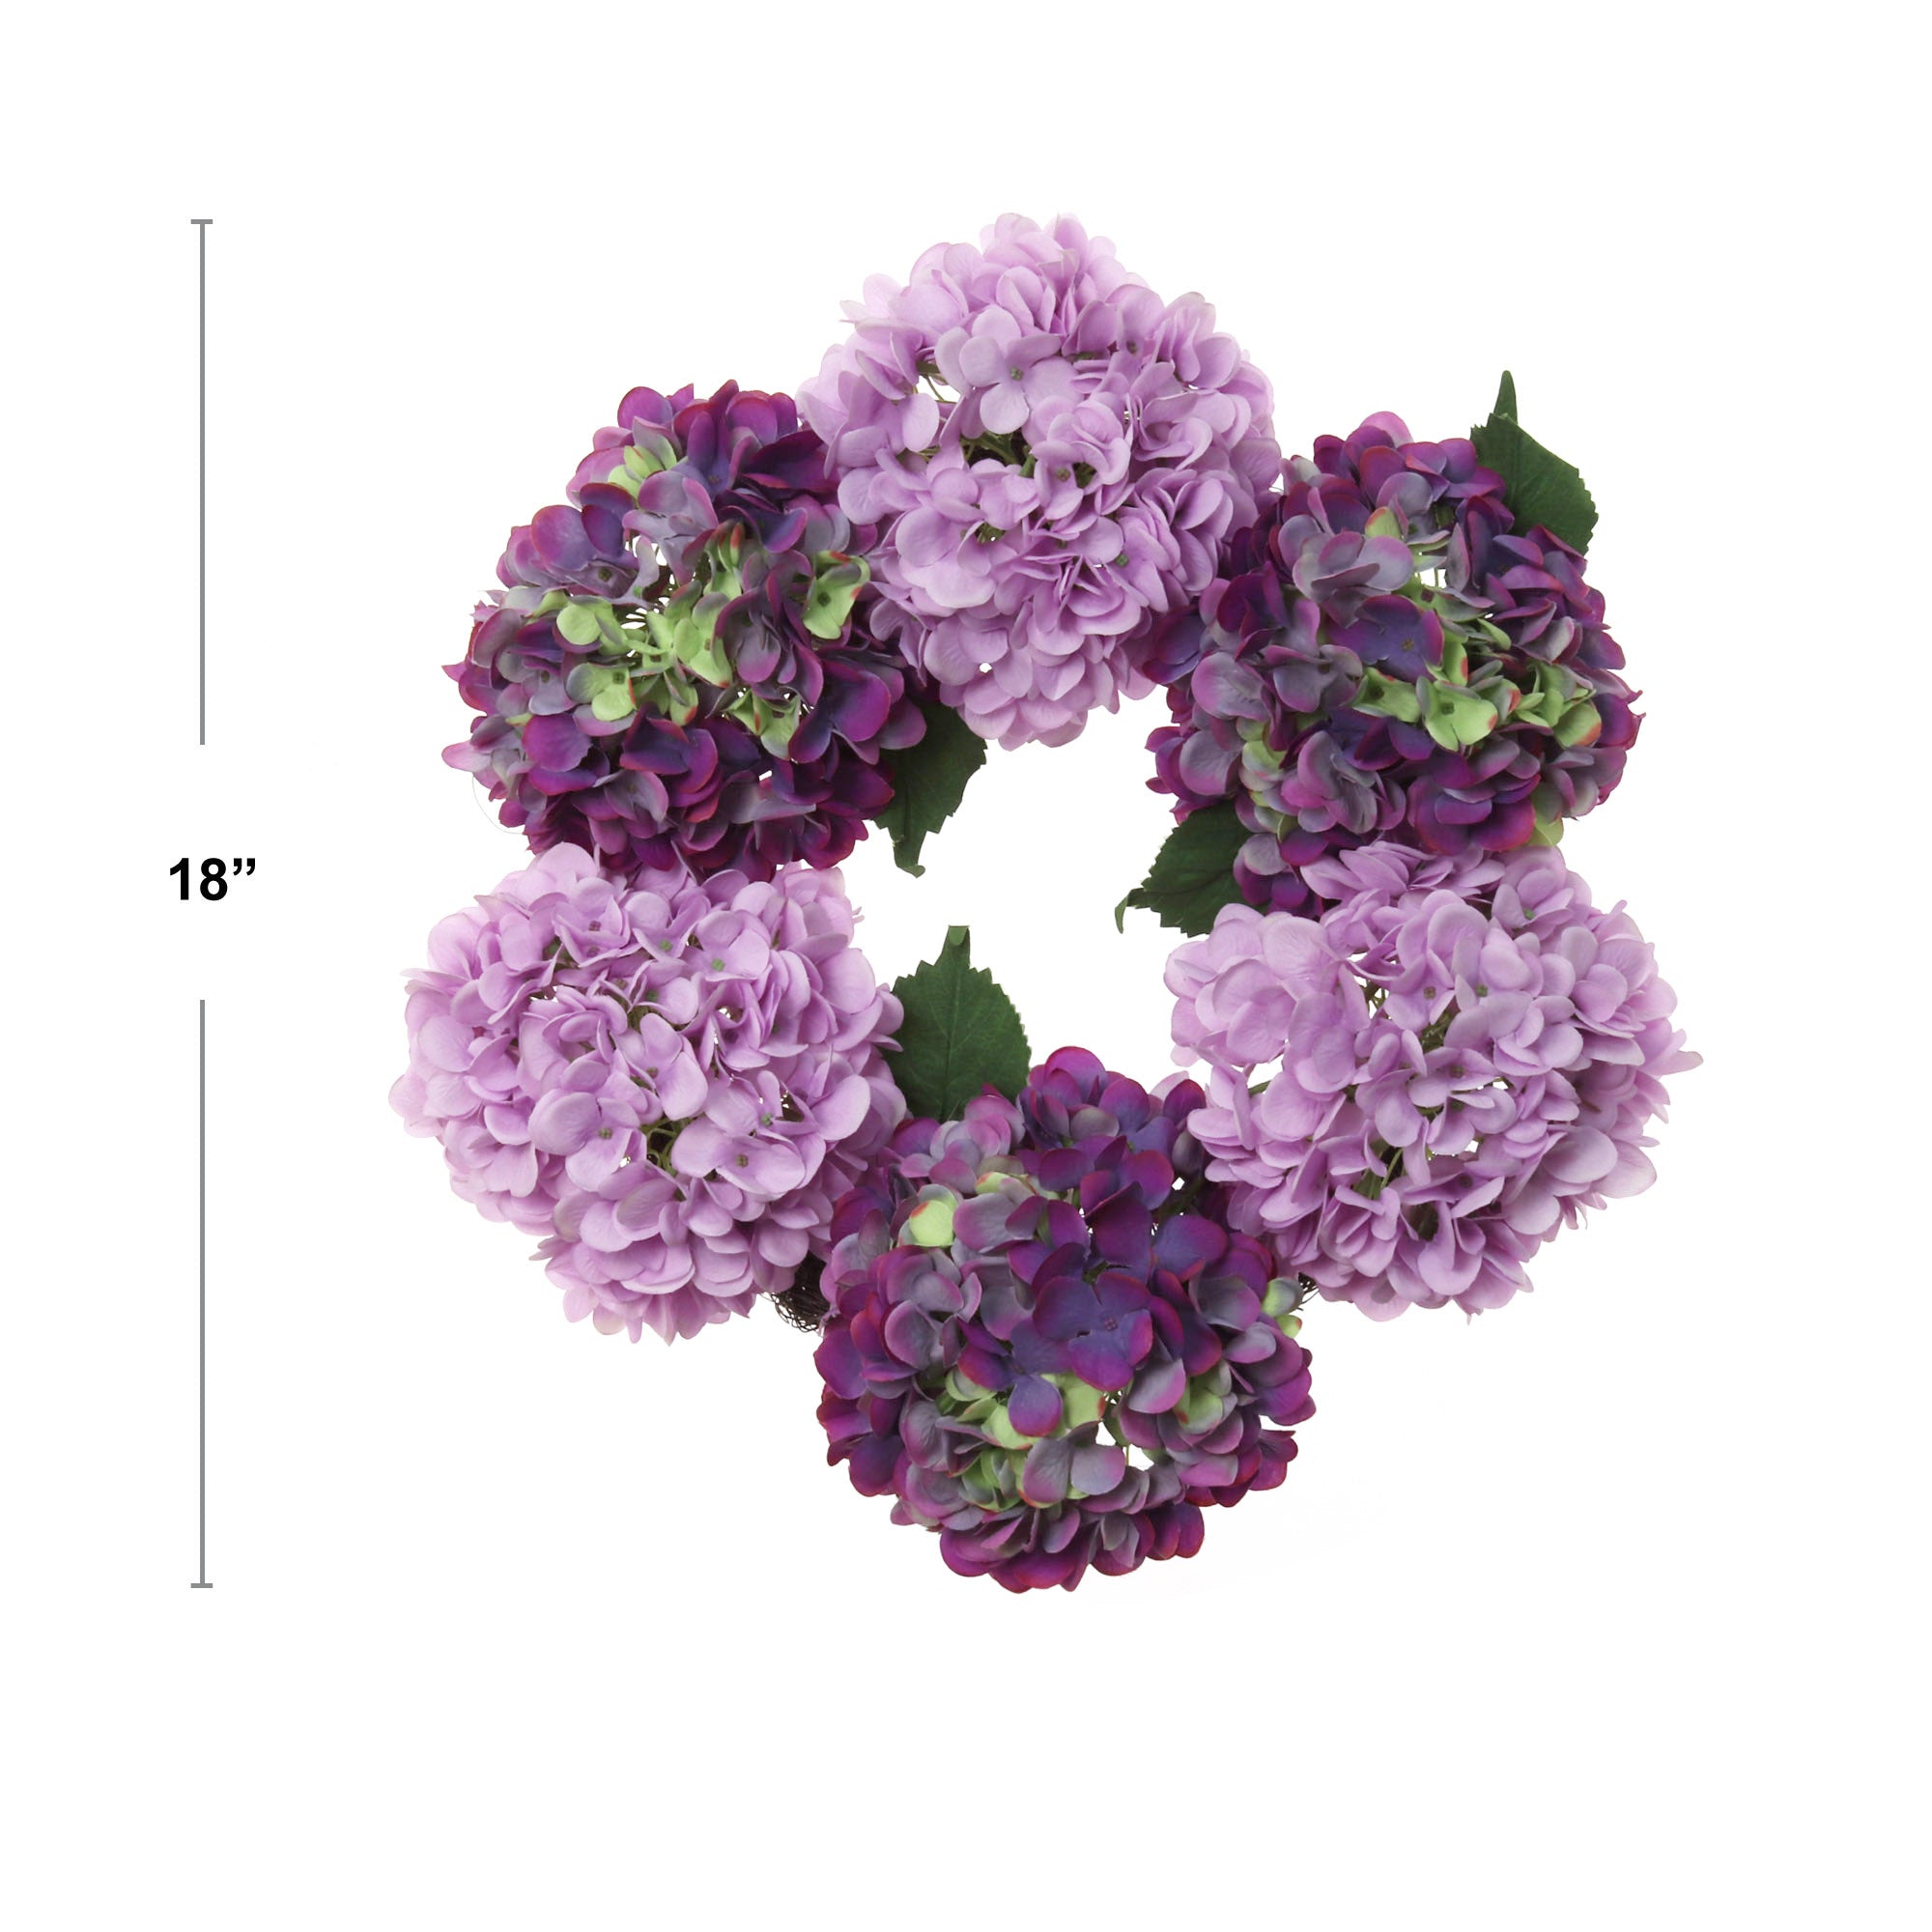 Artificial 18" Magenta & Pink Hydrangea Wreath - Handcrafted, UV Resistant, All-Season, Indoor/Outdoor Decor, Perfect for Home, Wedding, Event Hydrangea Wreath ArtificialFlowers   